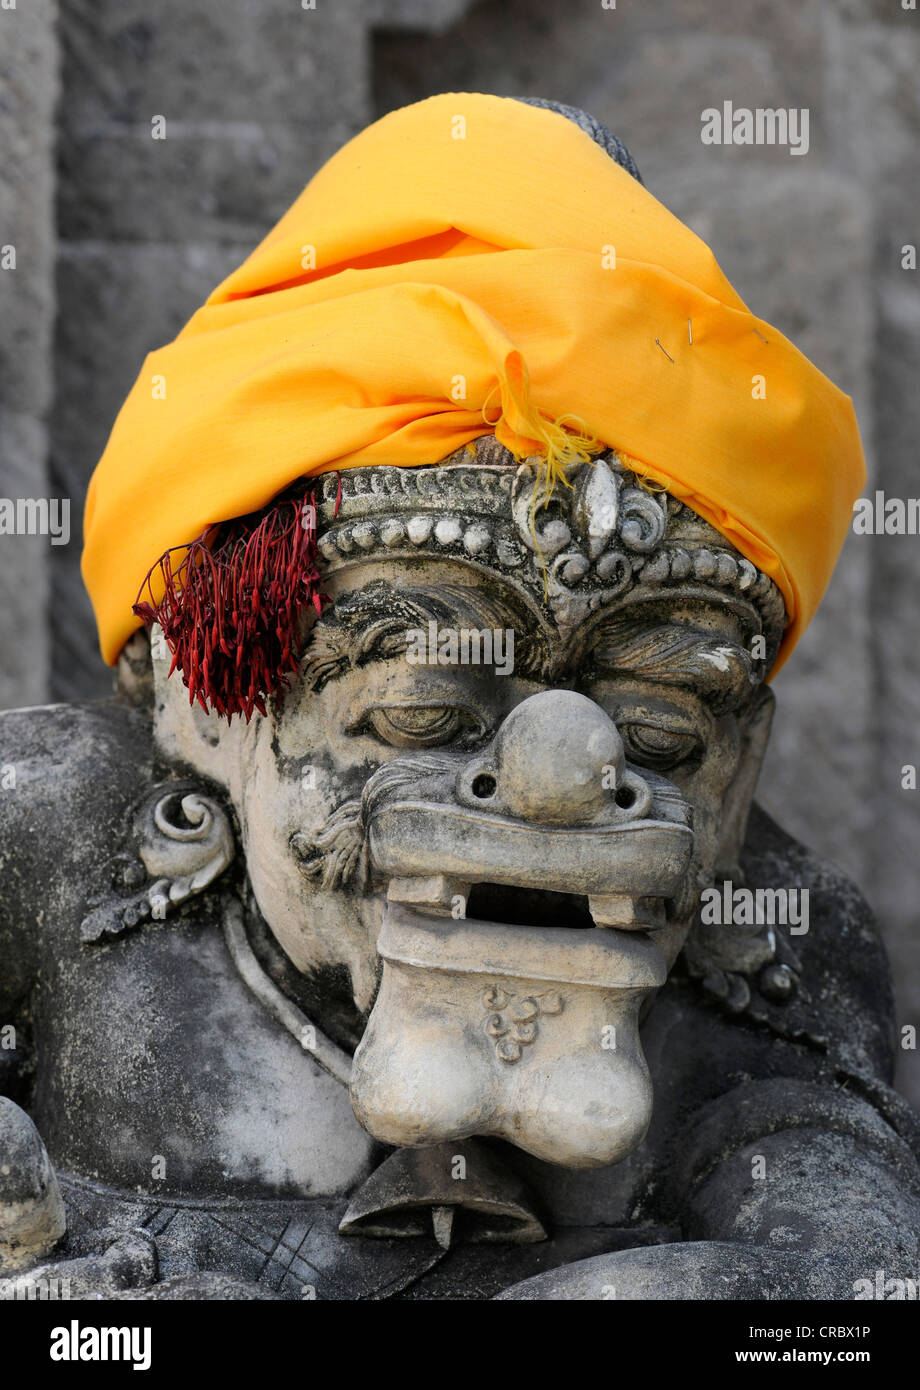 Religious sculpture, Denpasar, Bali, Indonesia, Southeast Asia Stock Photo